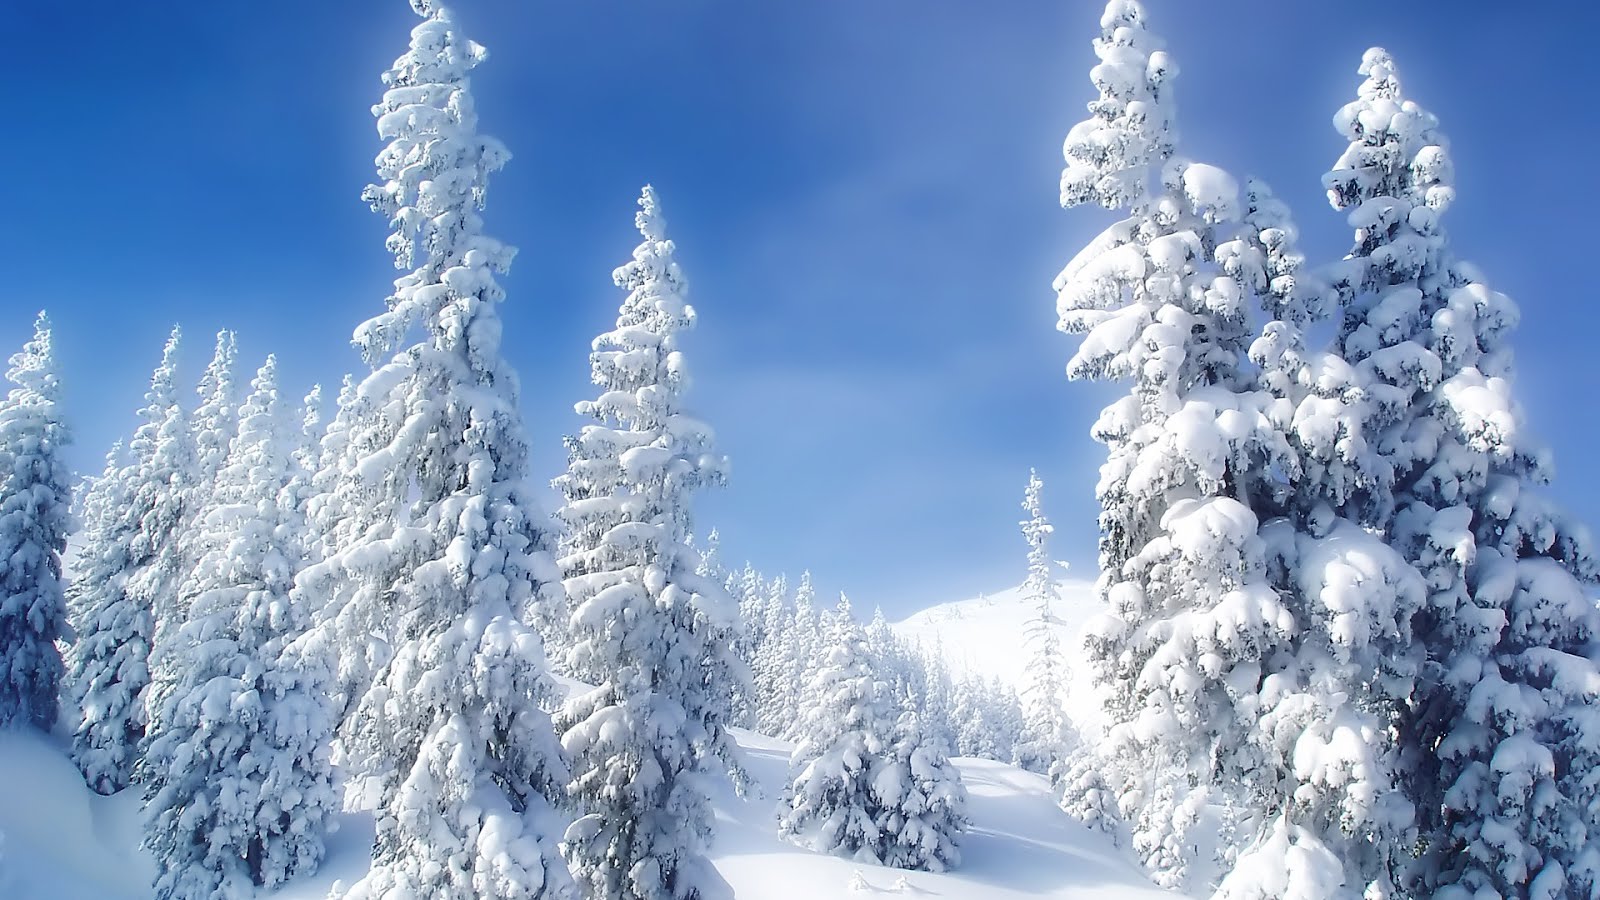 Winter Wonderland download free wallpapers for HD desktop